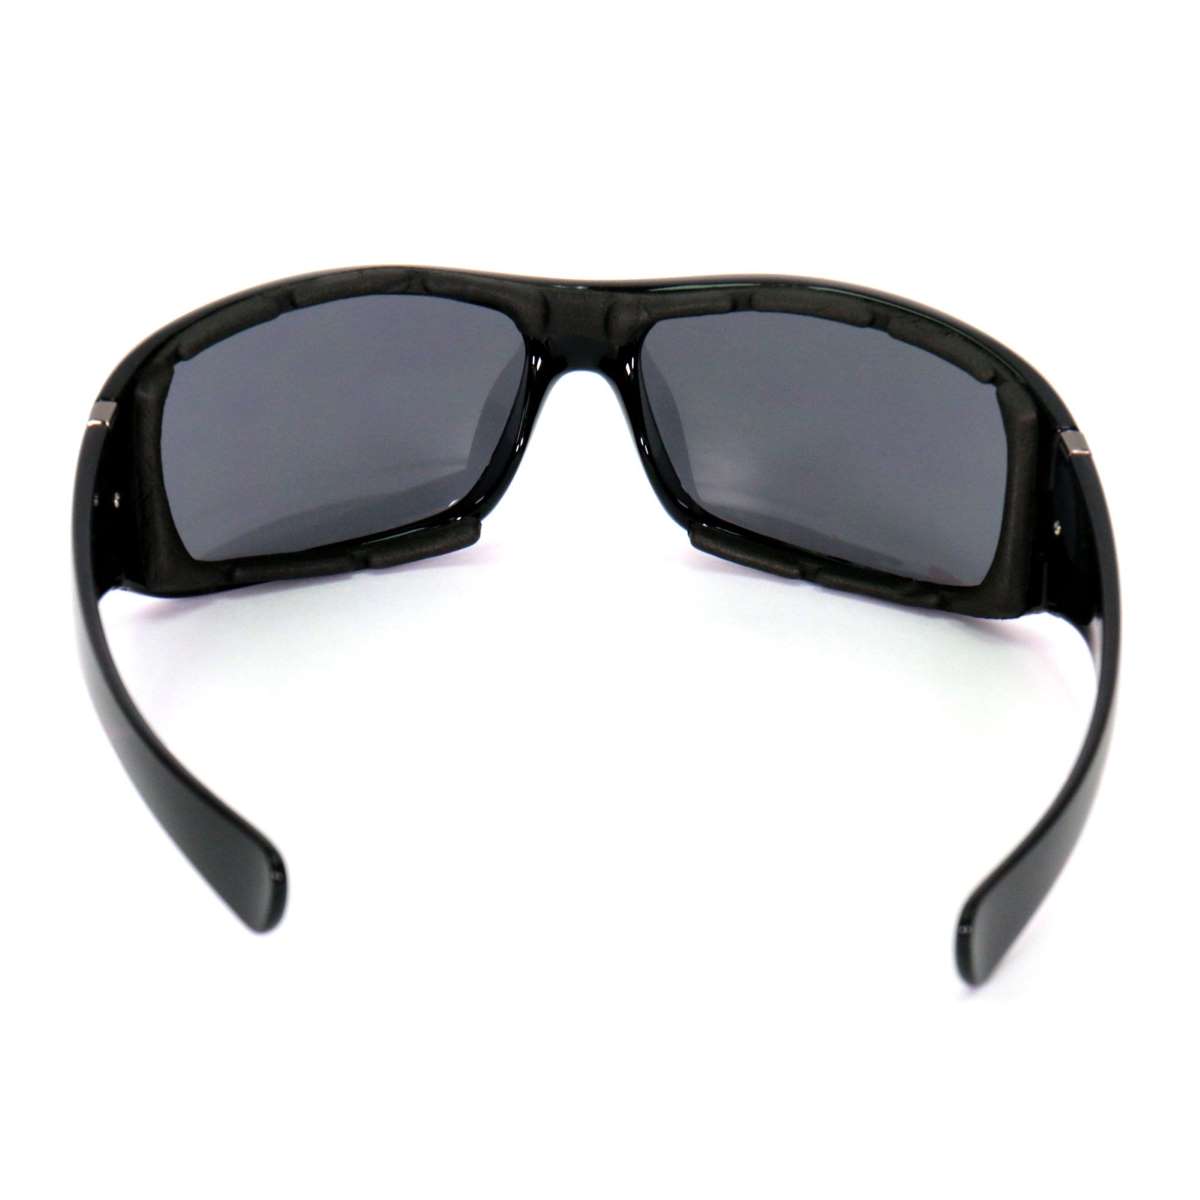 Hot Leathers Jayhawk Foam Padded Sunglasses with Smoke Lenses SGF1064